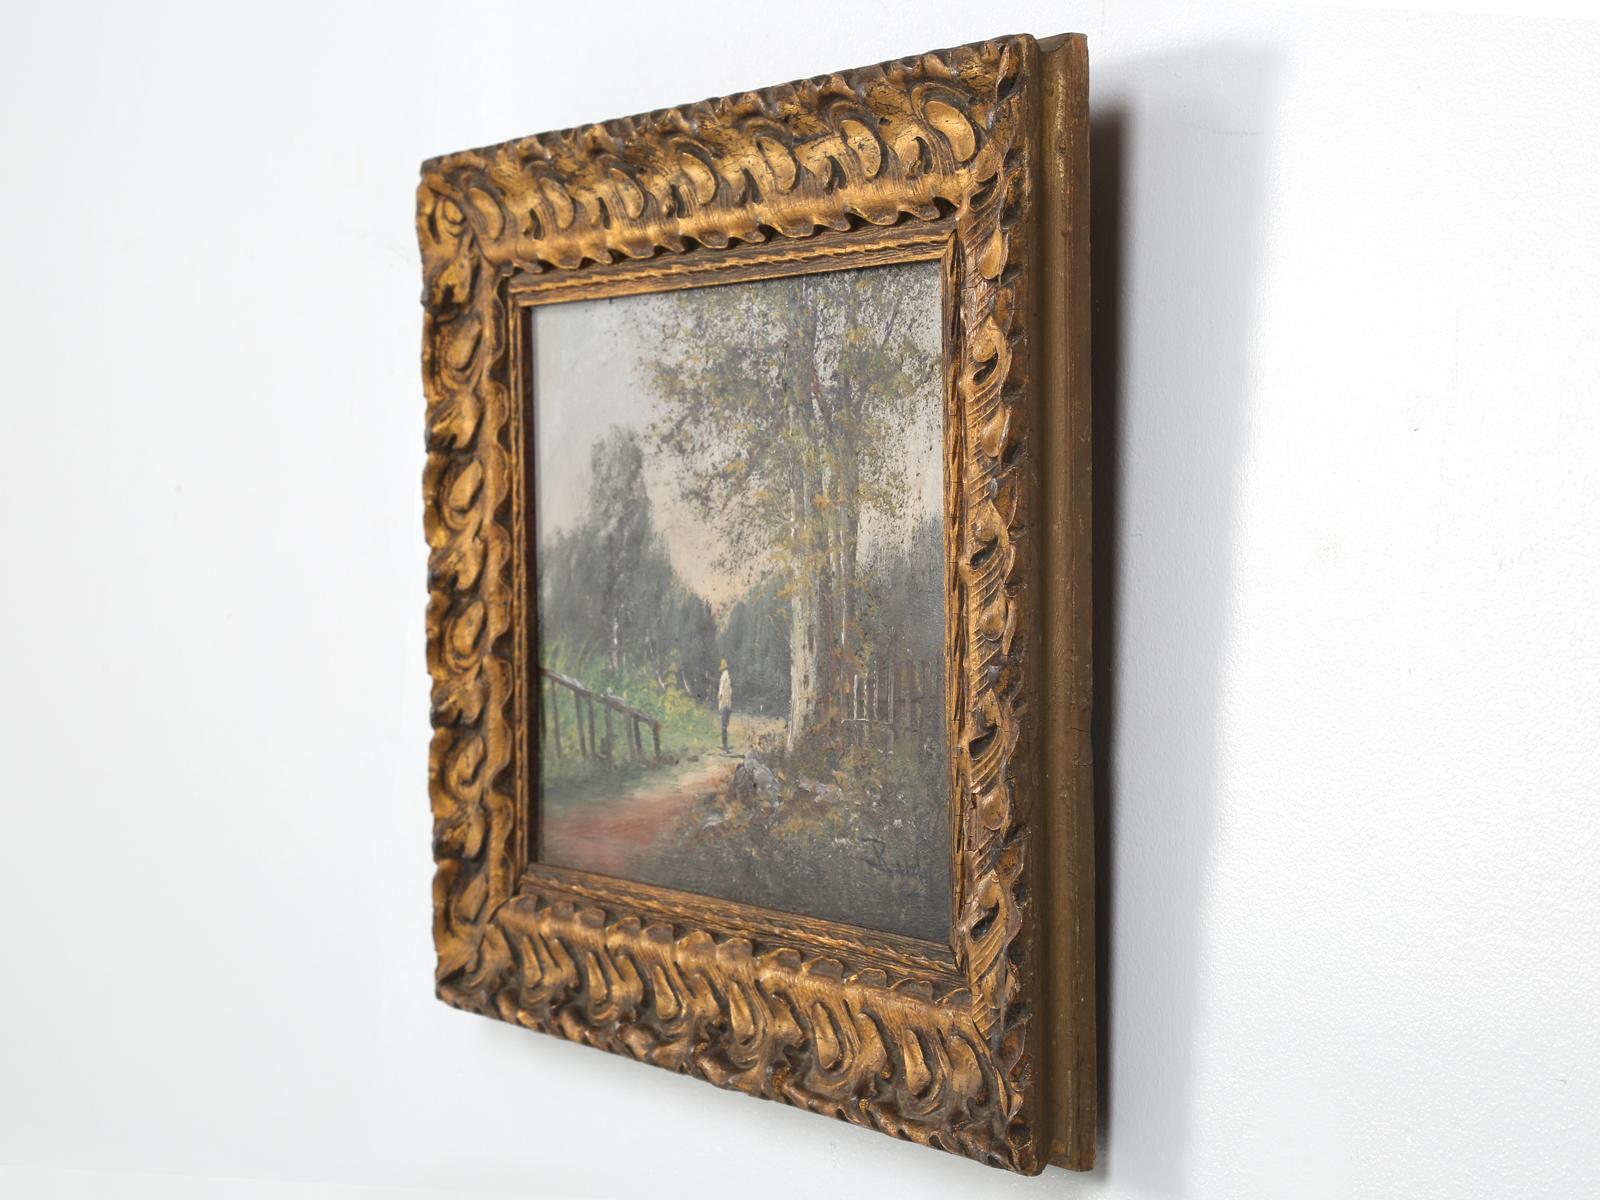 Antique French Landscape Oil Painting on Linen Signed Baldy, Original Gilt Frame For Sale 5